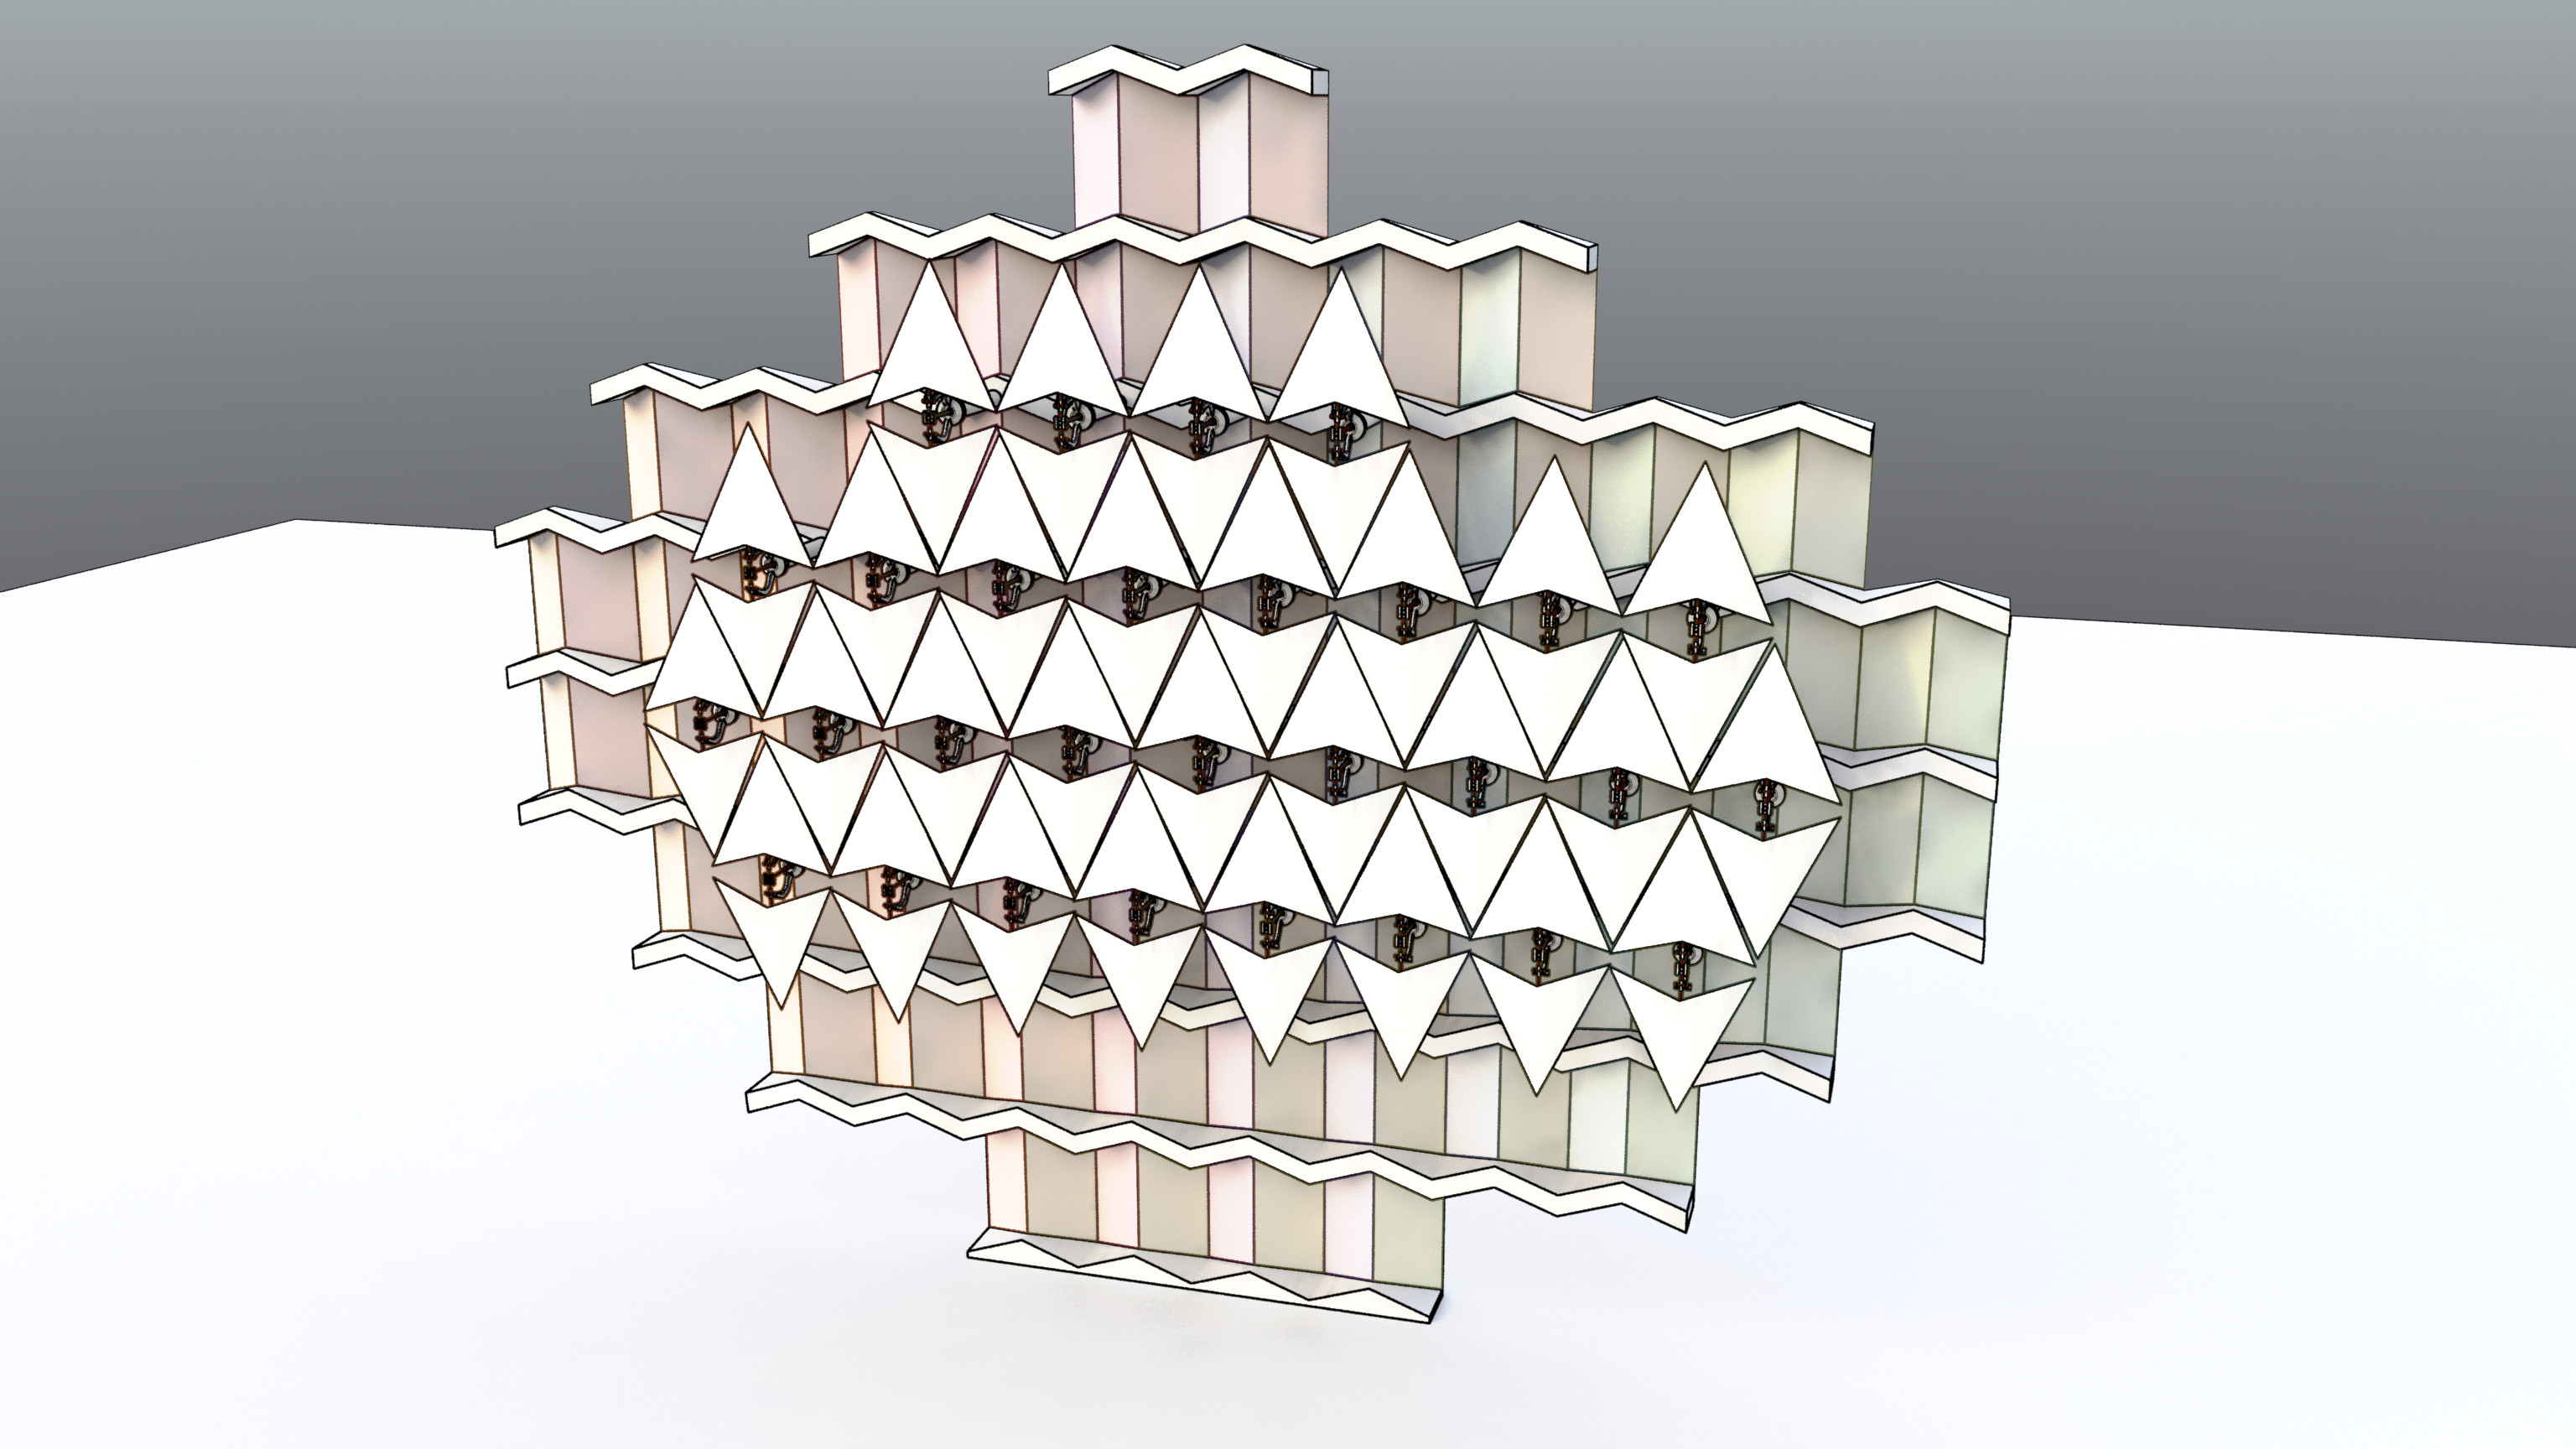 180º opposed scales setup: maximum shading over chevron butt-glazed static façade.